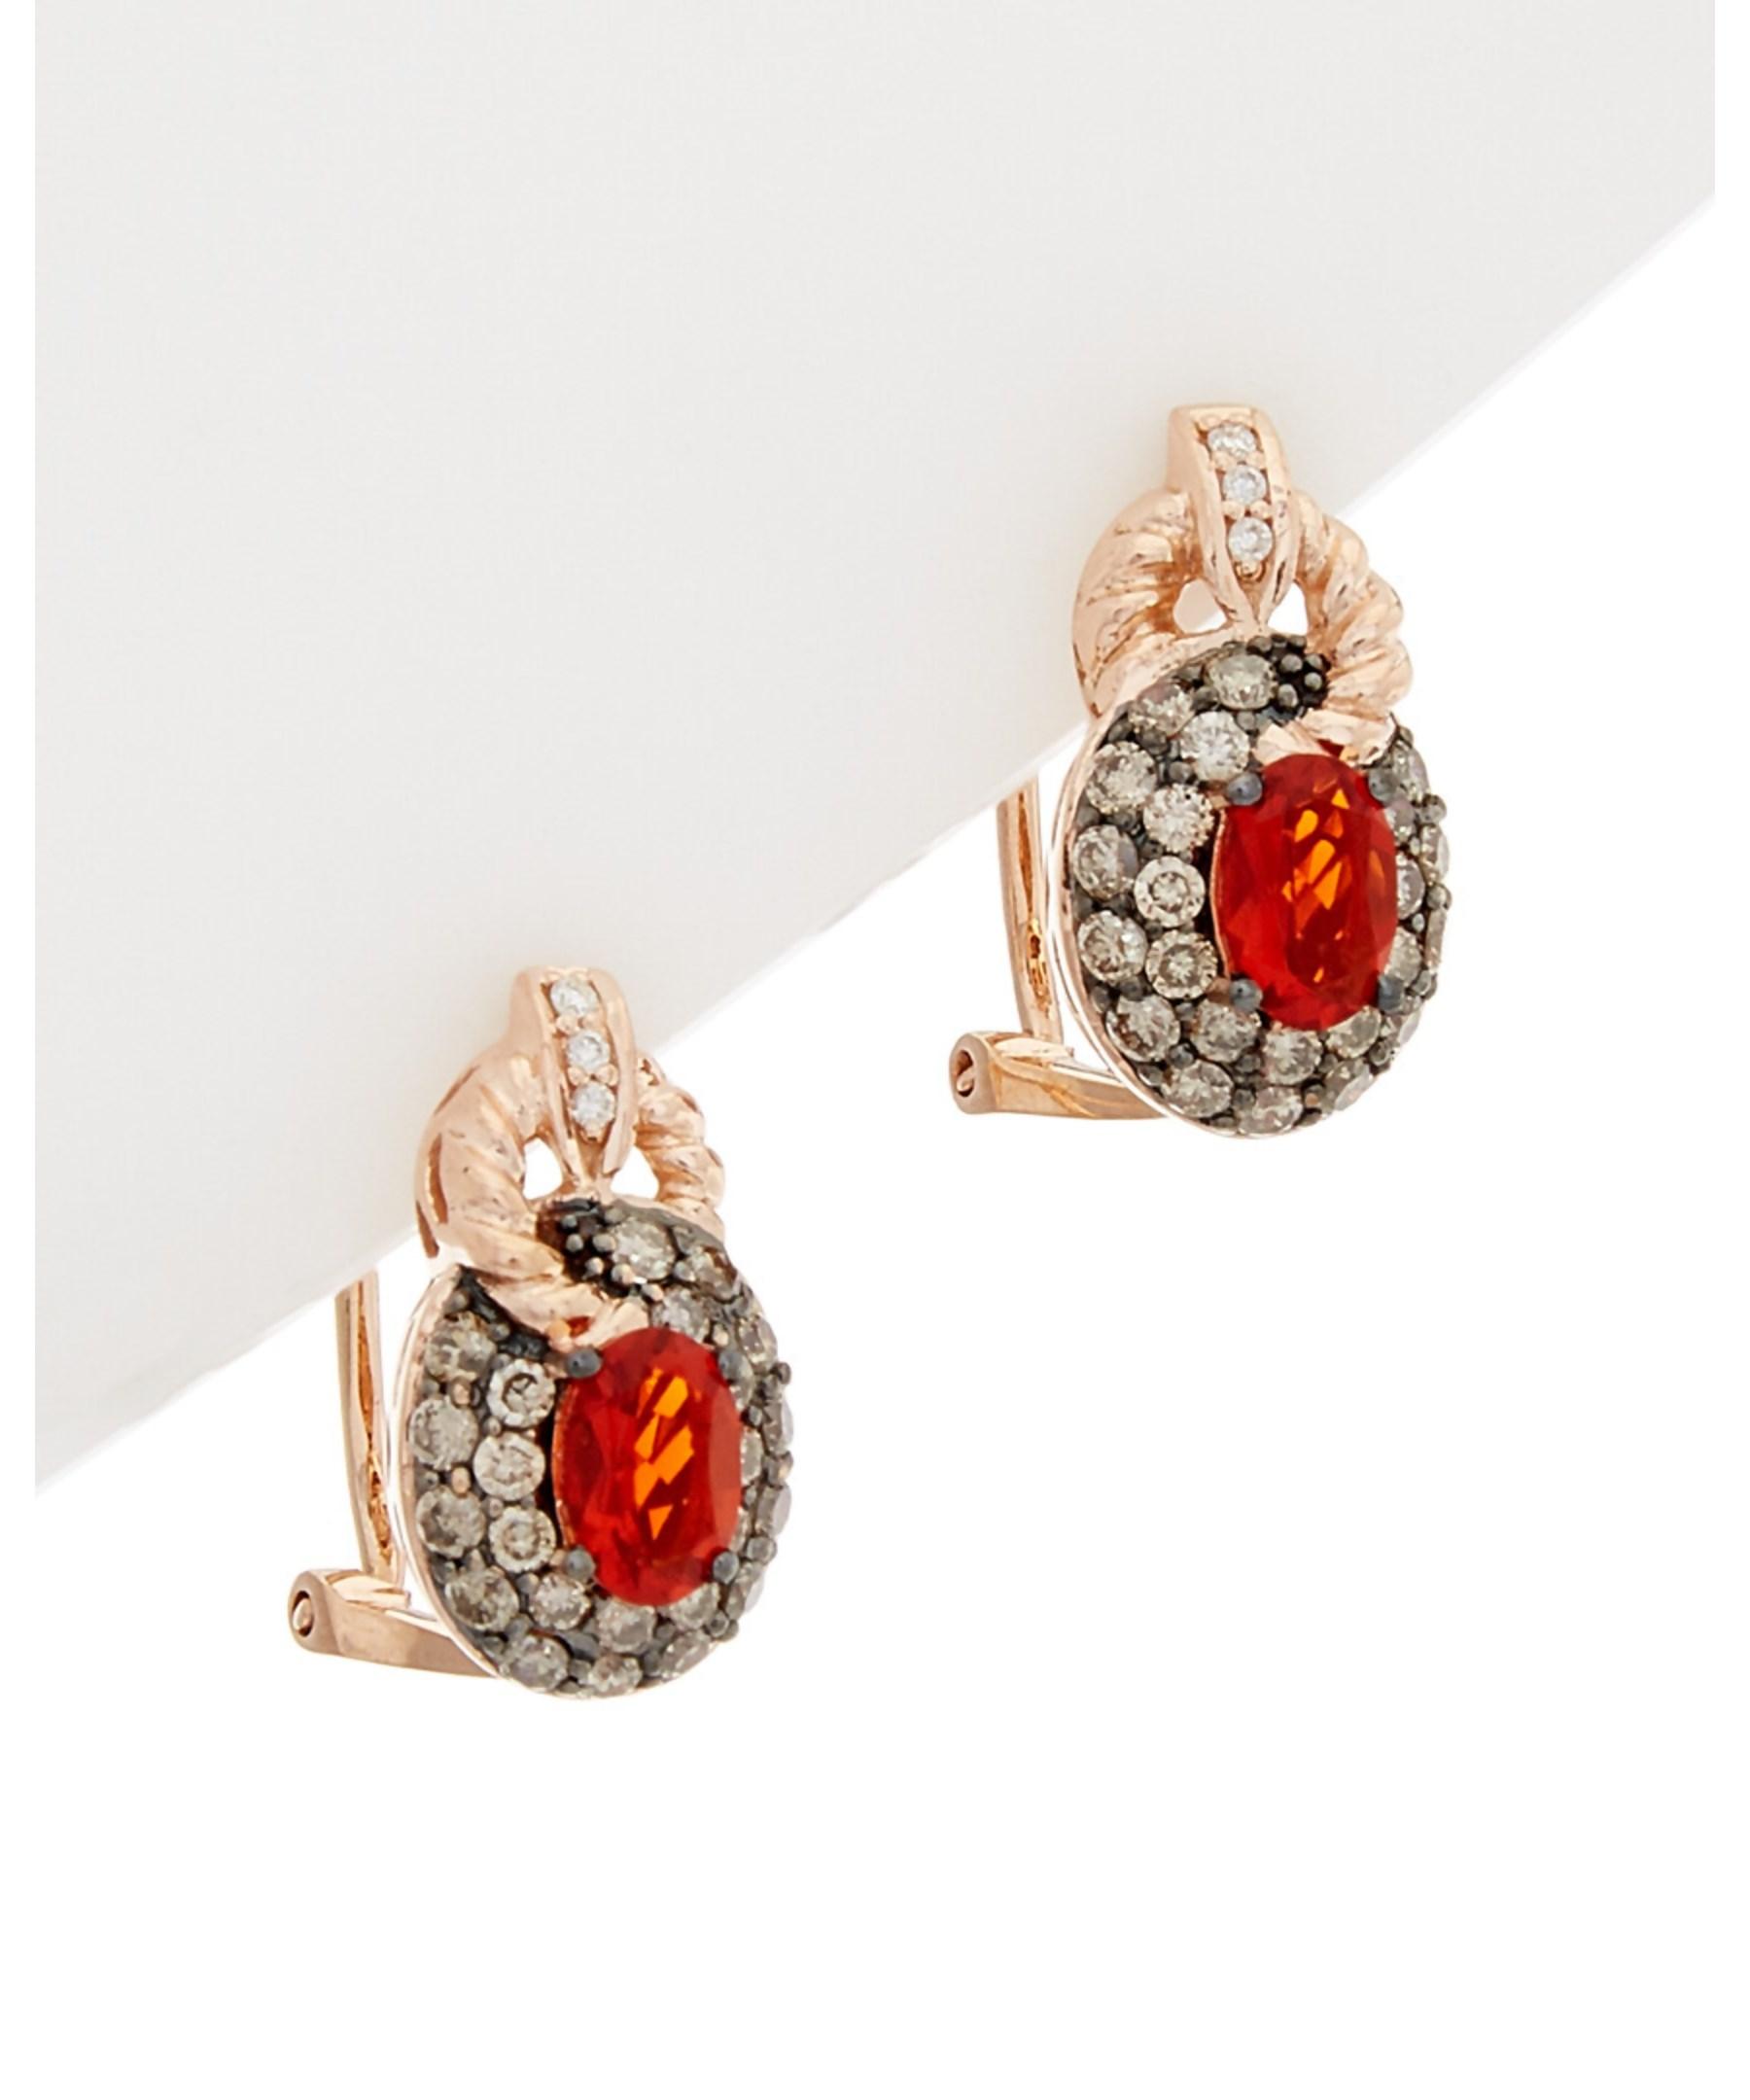 Lyst Le Vian 14k Rose Gold 1.19 Ct. Tw. White & Chocolate Diamond & Opal Earrings in Metallic